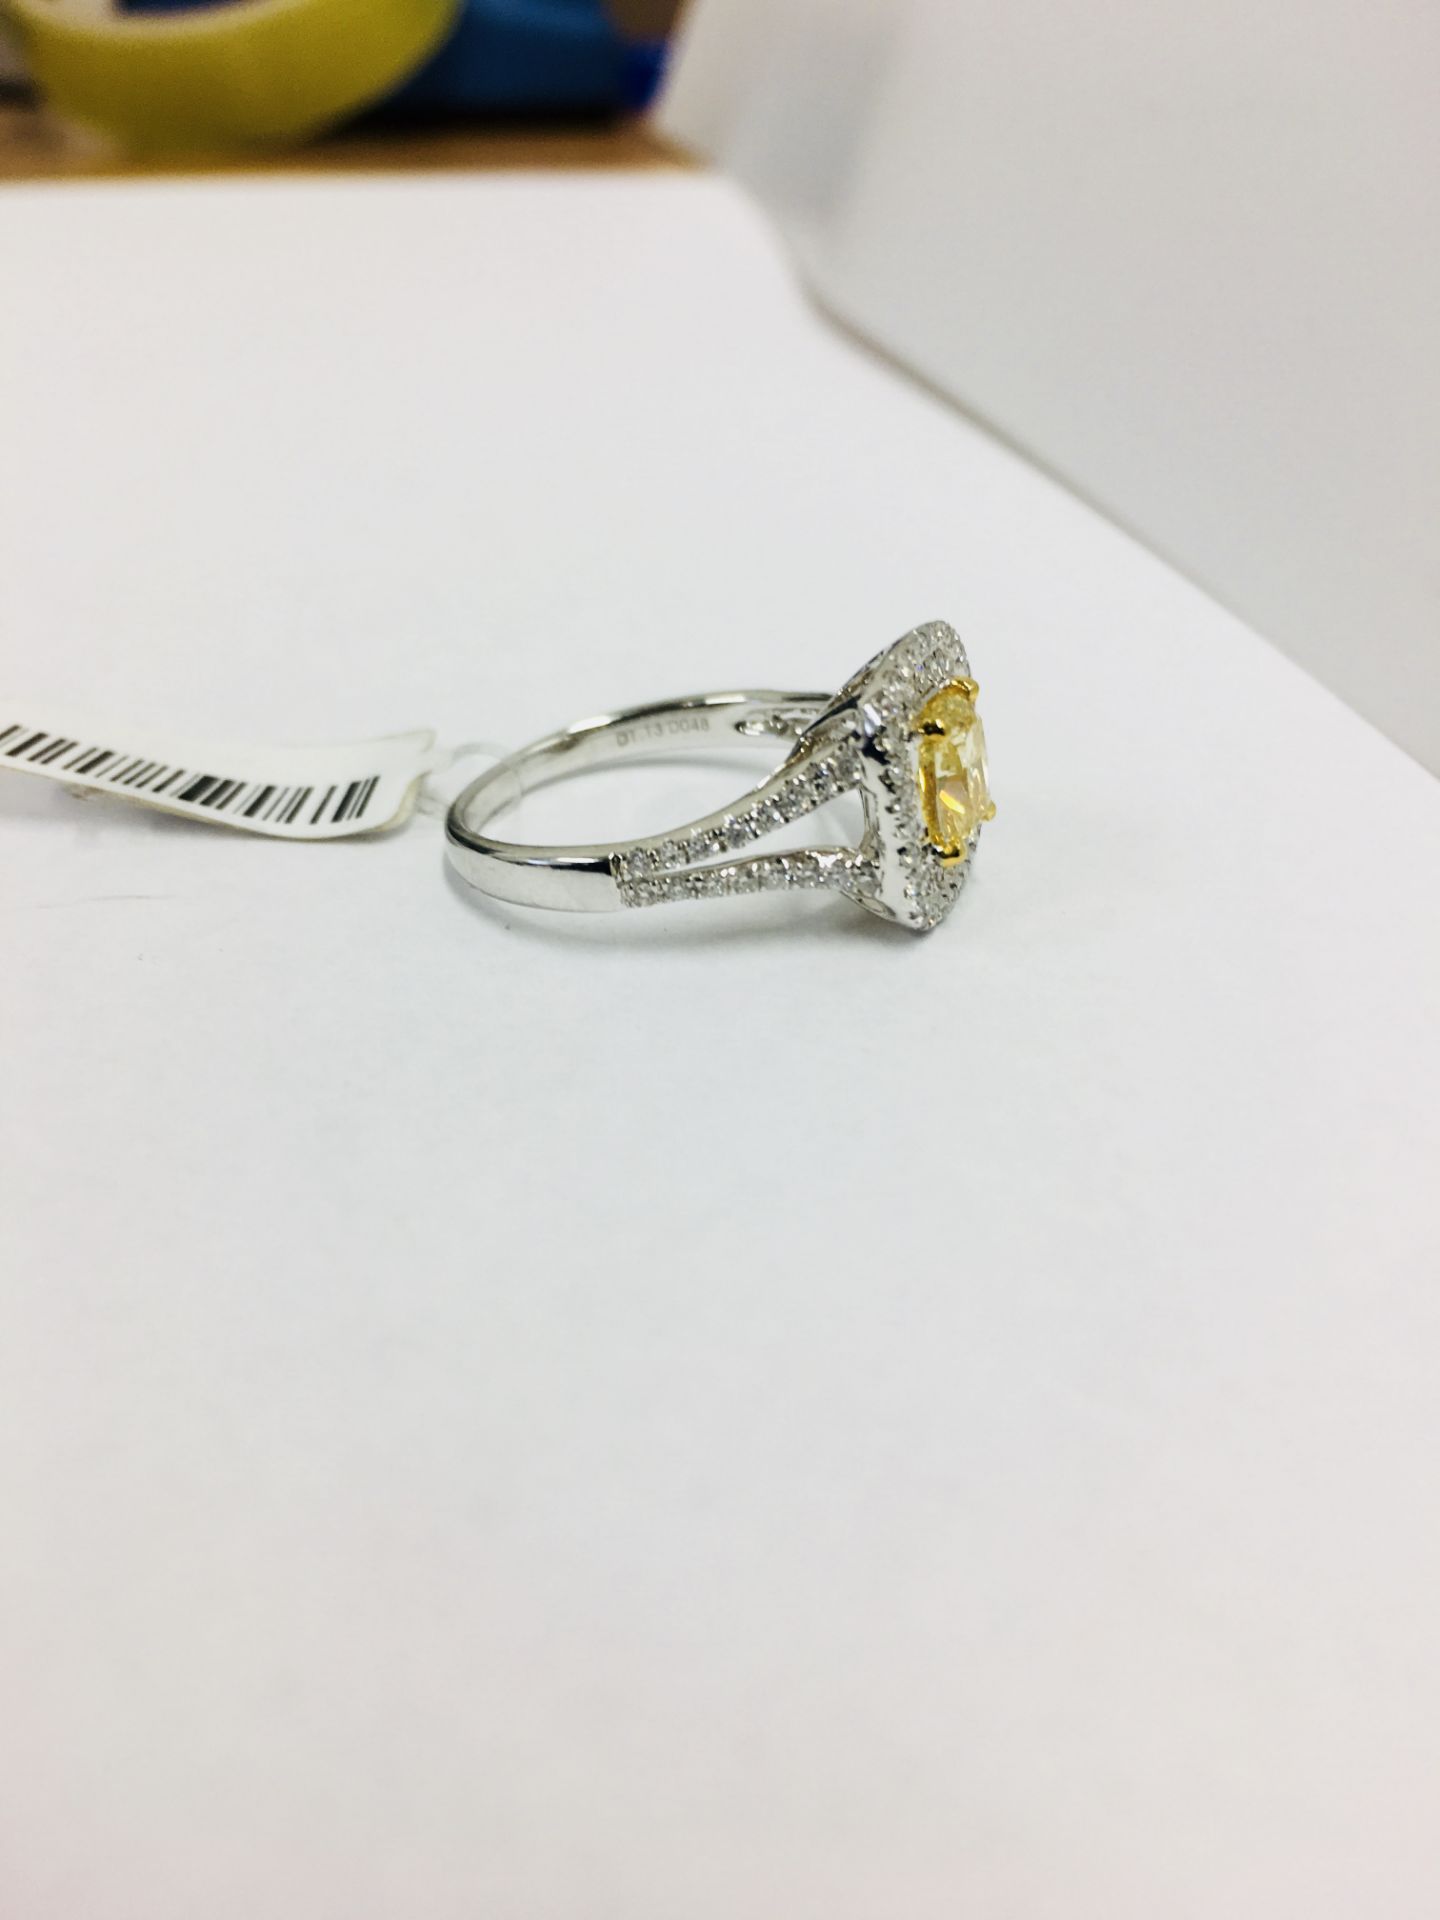 1.11ct Fancy yellow diamond gia certification 3195793106,18ct white gold fancy style setting diamond - Image 5 of 6